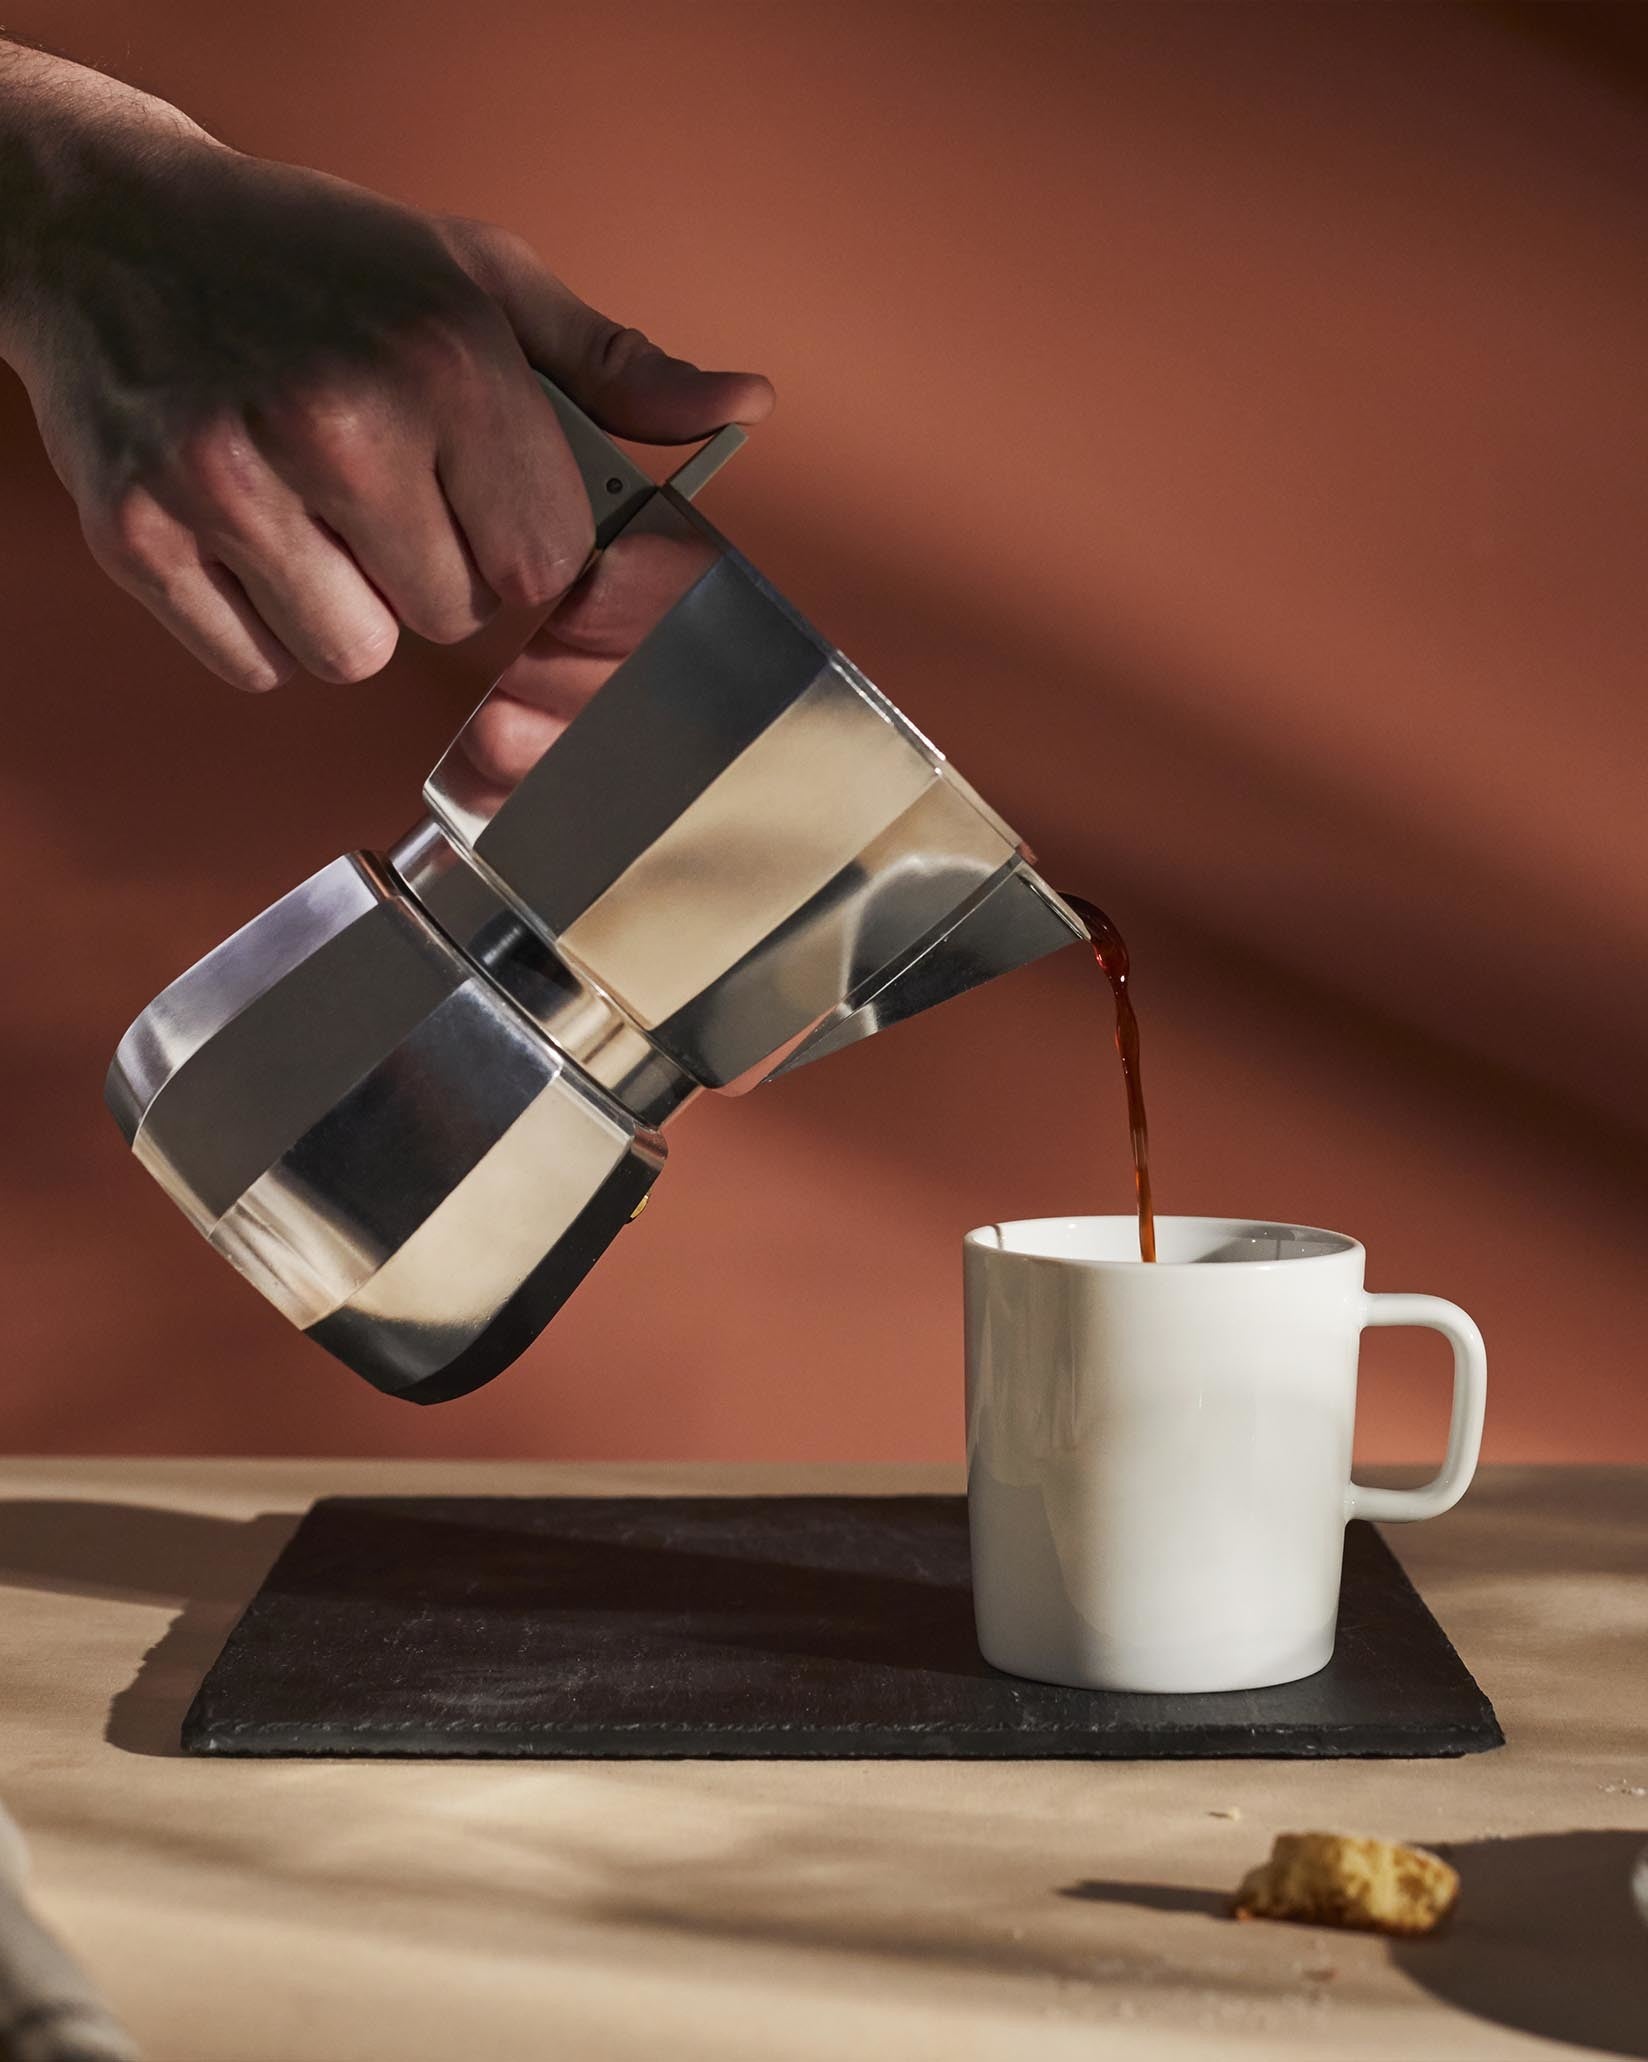 Moka Induction Espresso Coffee Maker – Alessi USA Inc